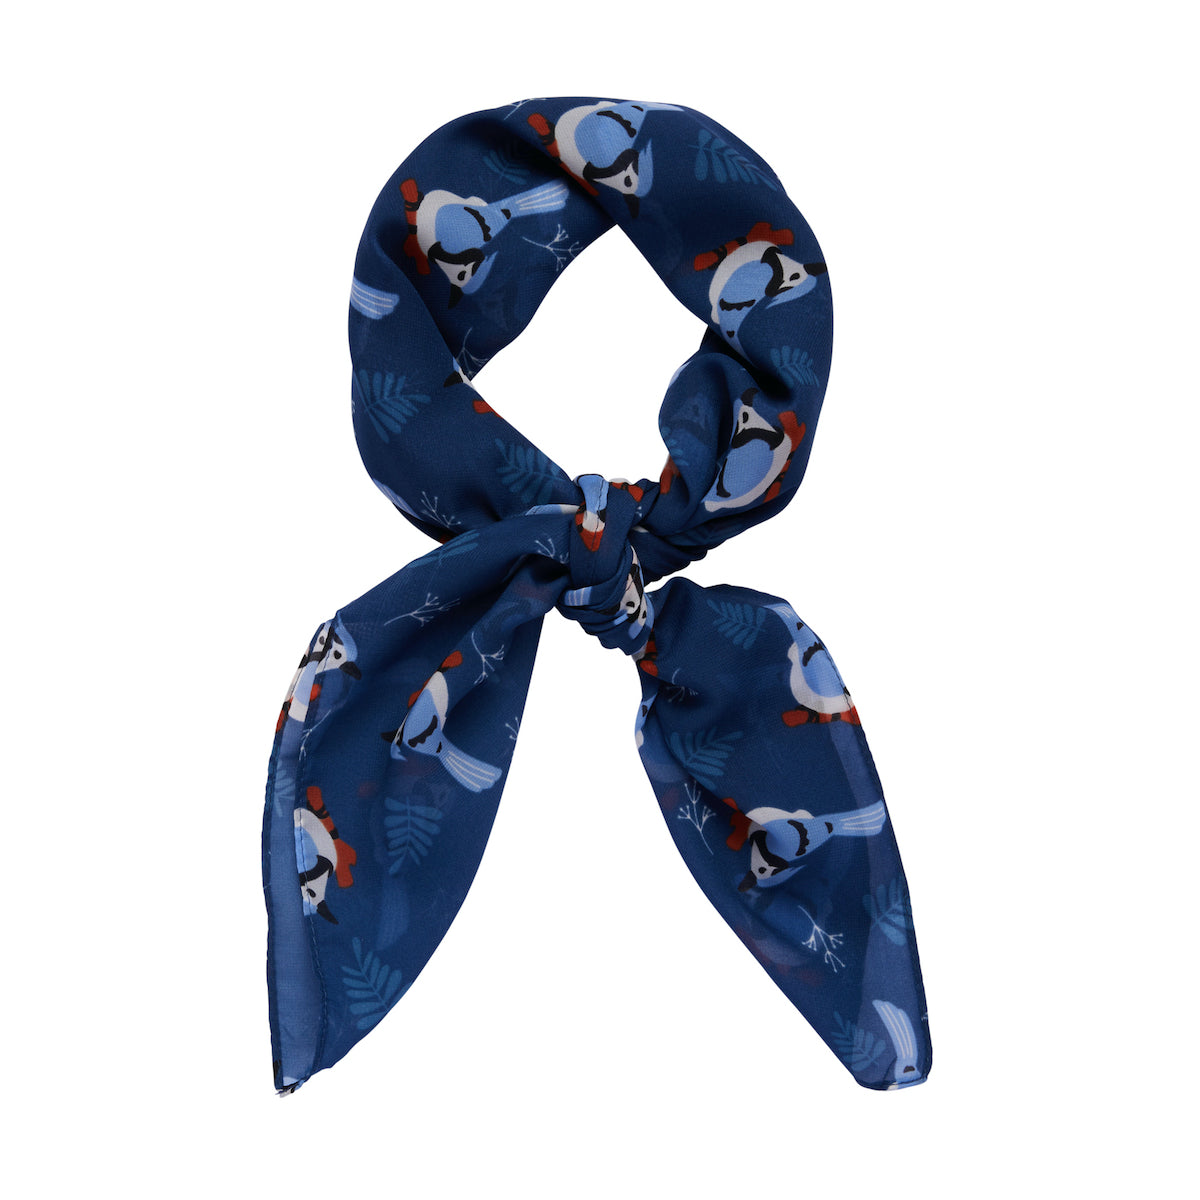 27" x 27" deep blue semi-sheer Blue Jay Wayn blue birds allover print scarf